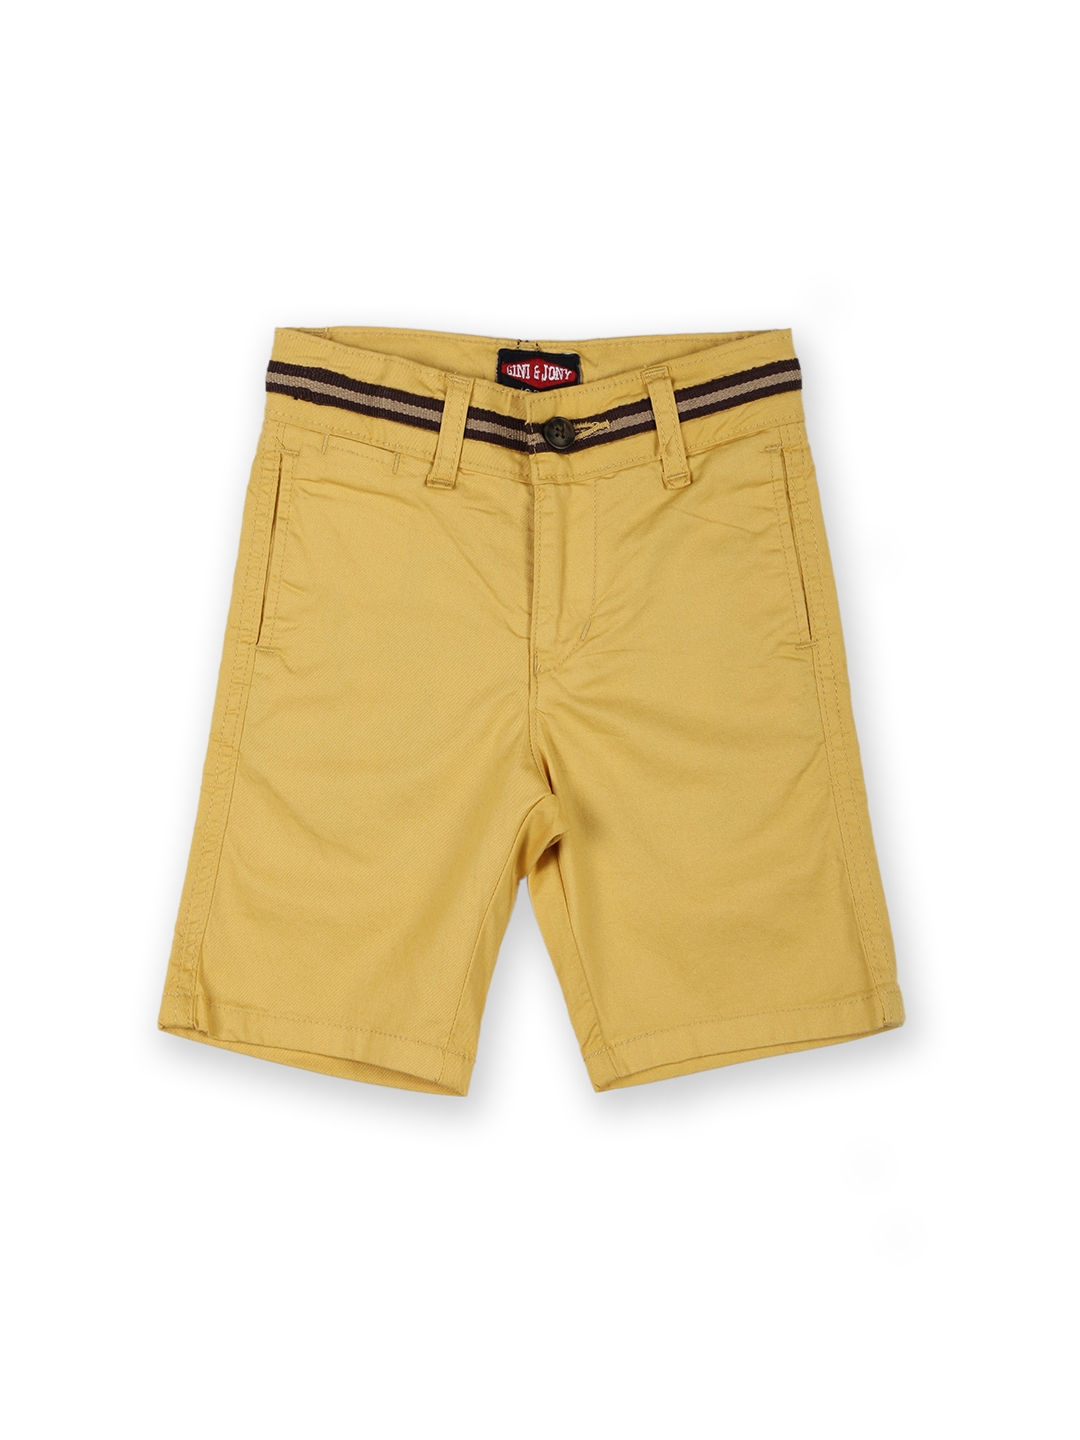 Buy Yellow Trousers  Pants for Boys by ADBUCKS Online  Ajiocom